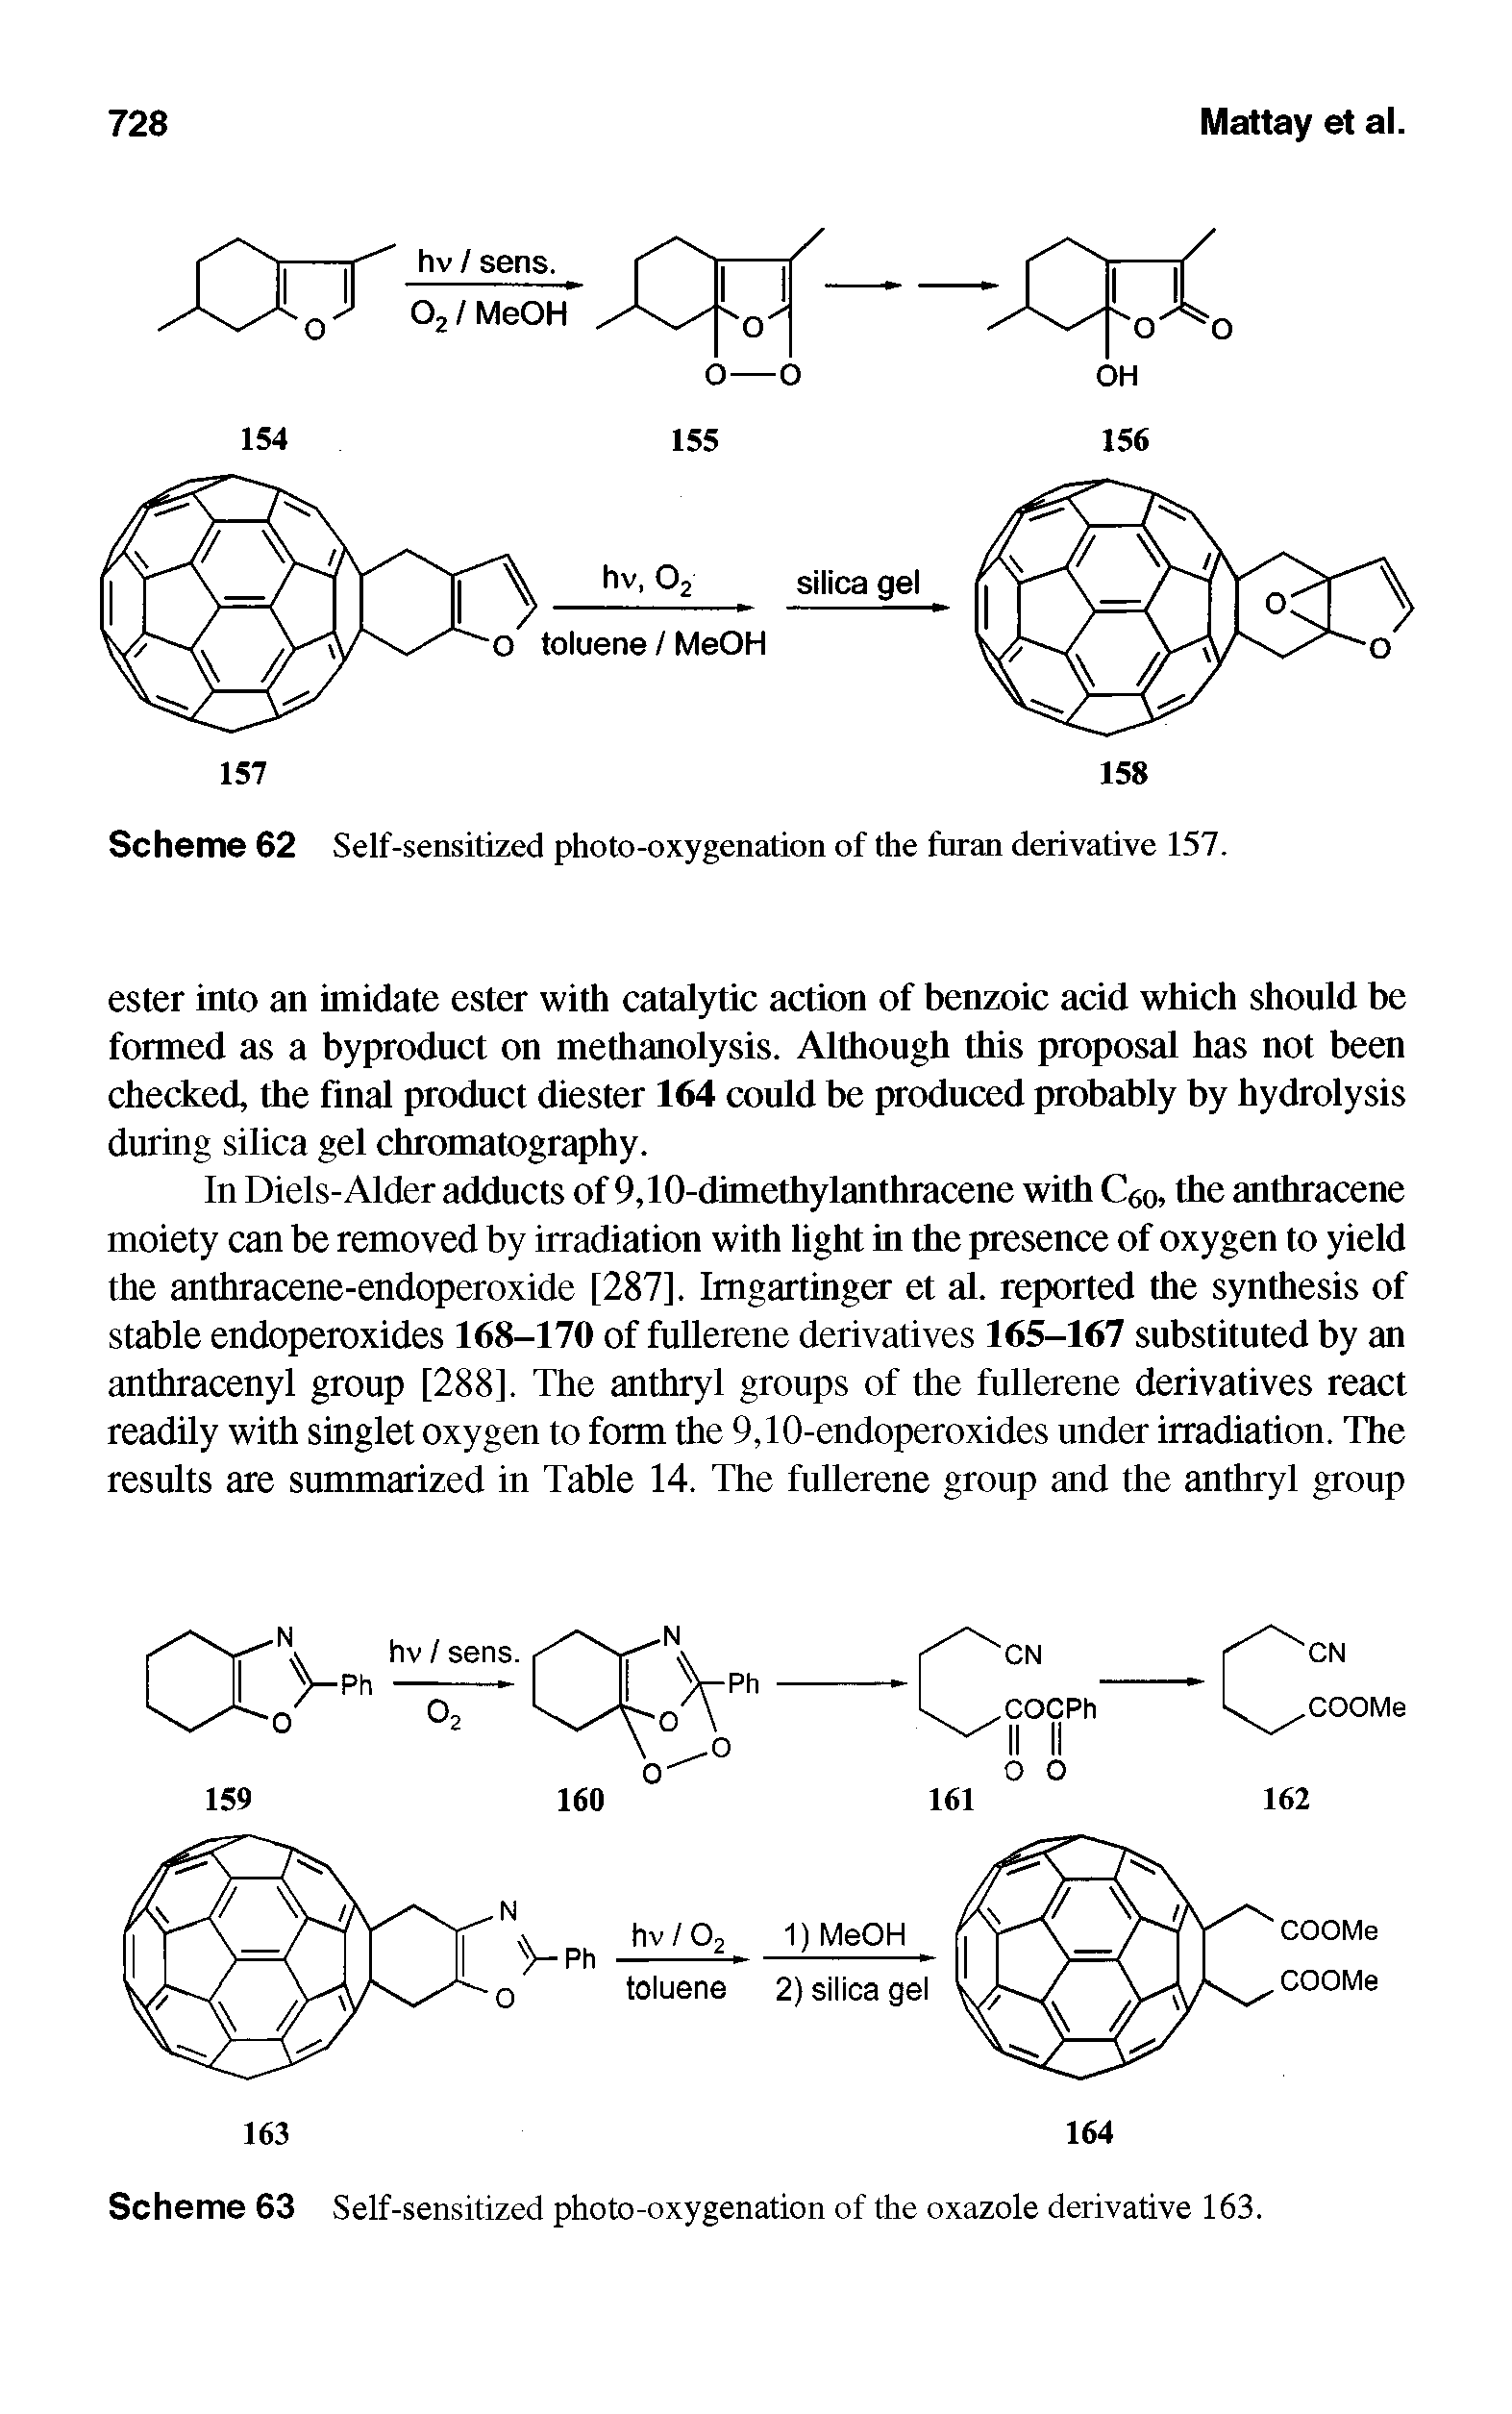 Scheme 63 Self-sensitized photo-oxygenation of the oxazole derivative 163.